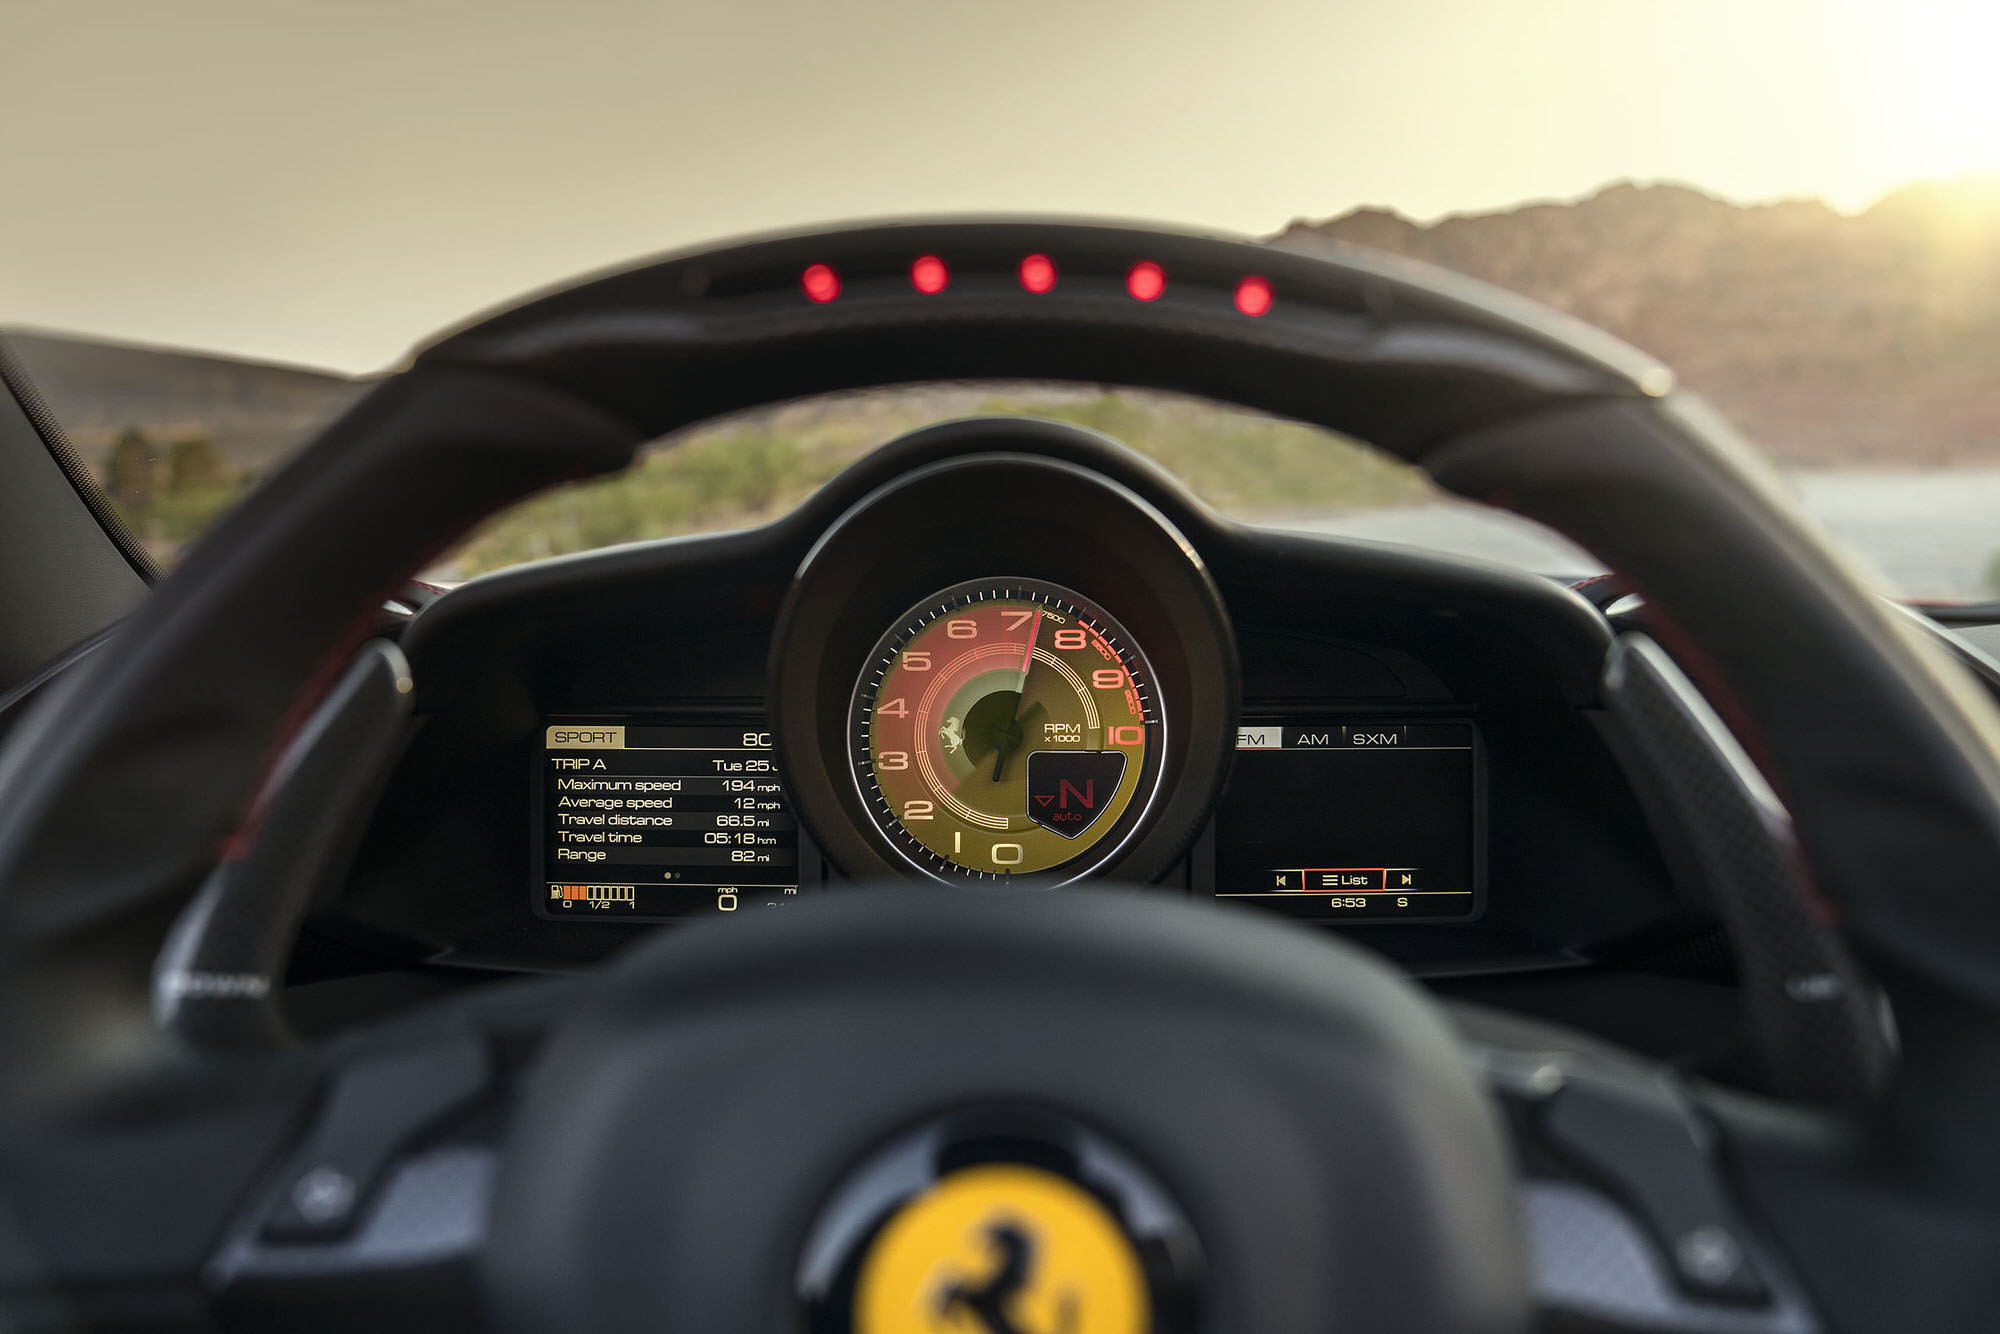 Tachometer of Ferrari 458. Shot in Las Vegas, NV